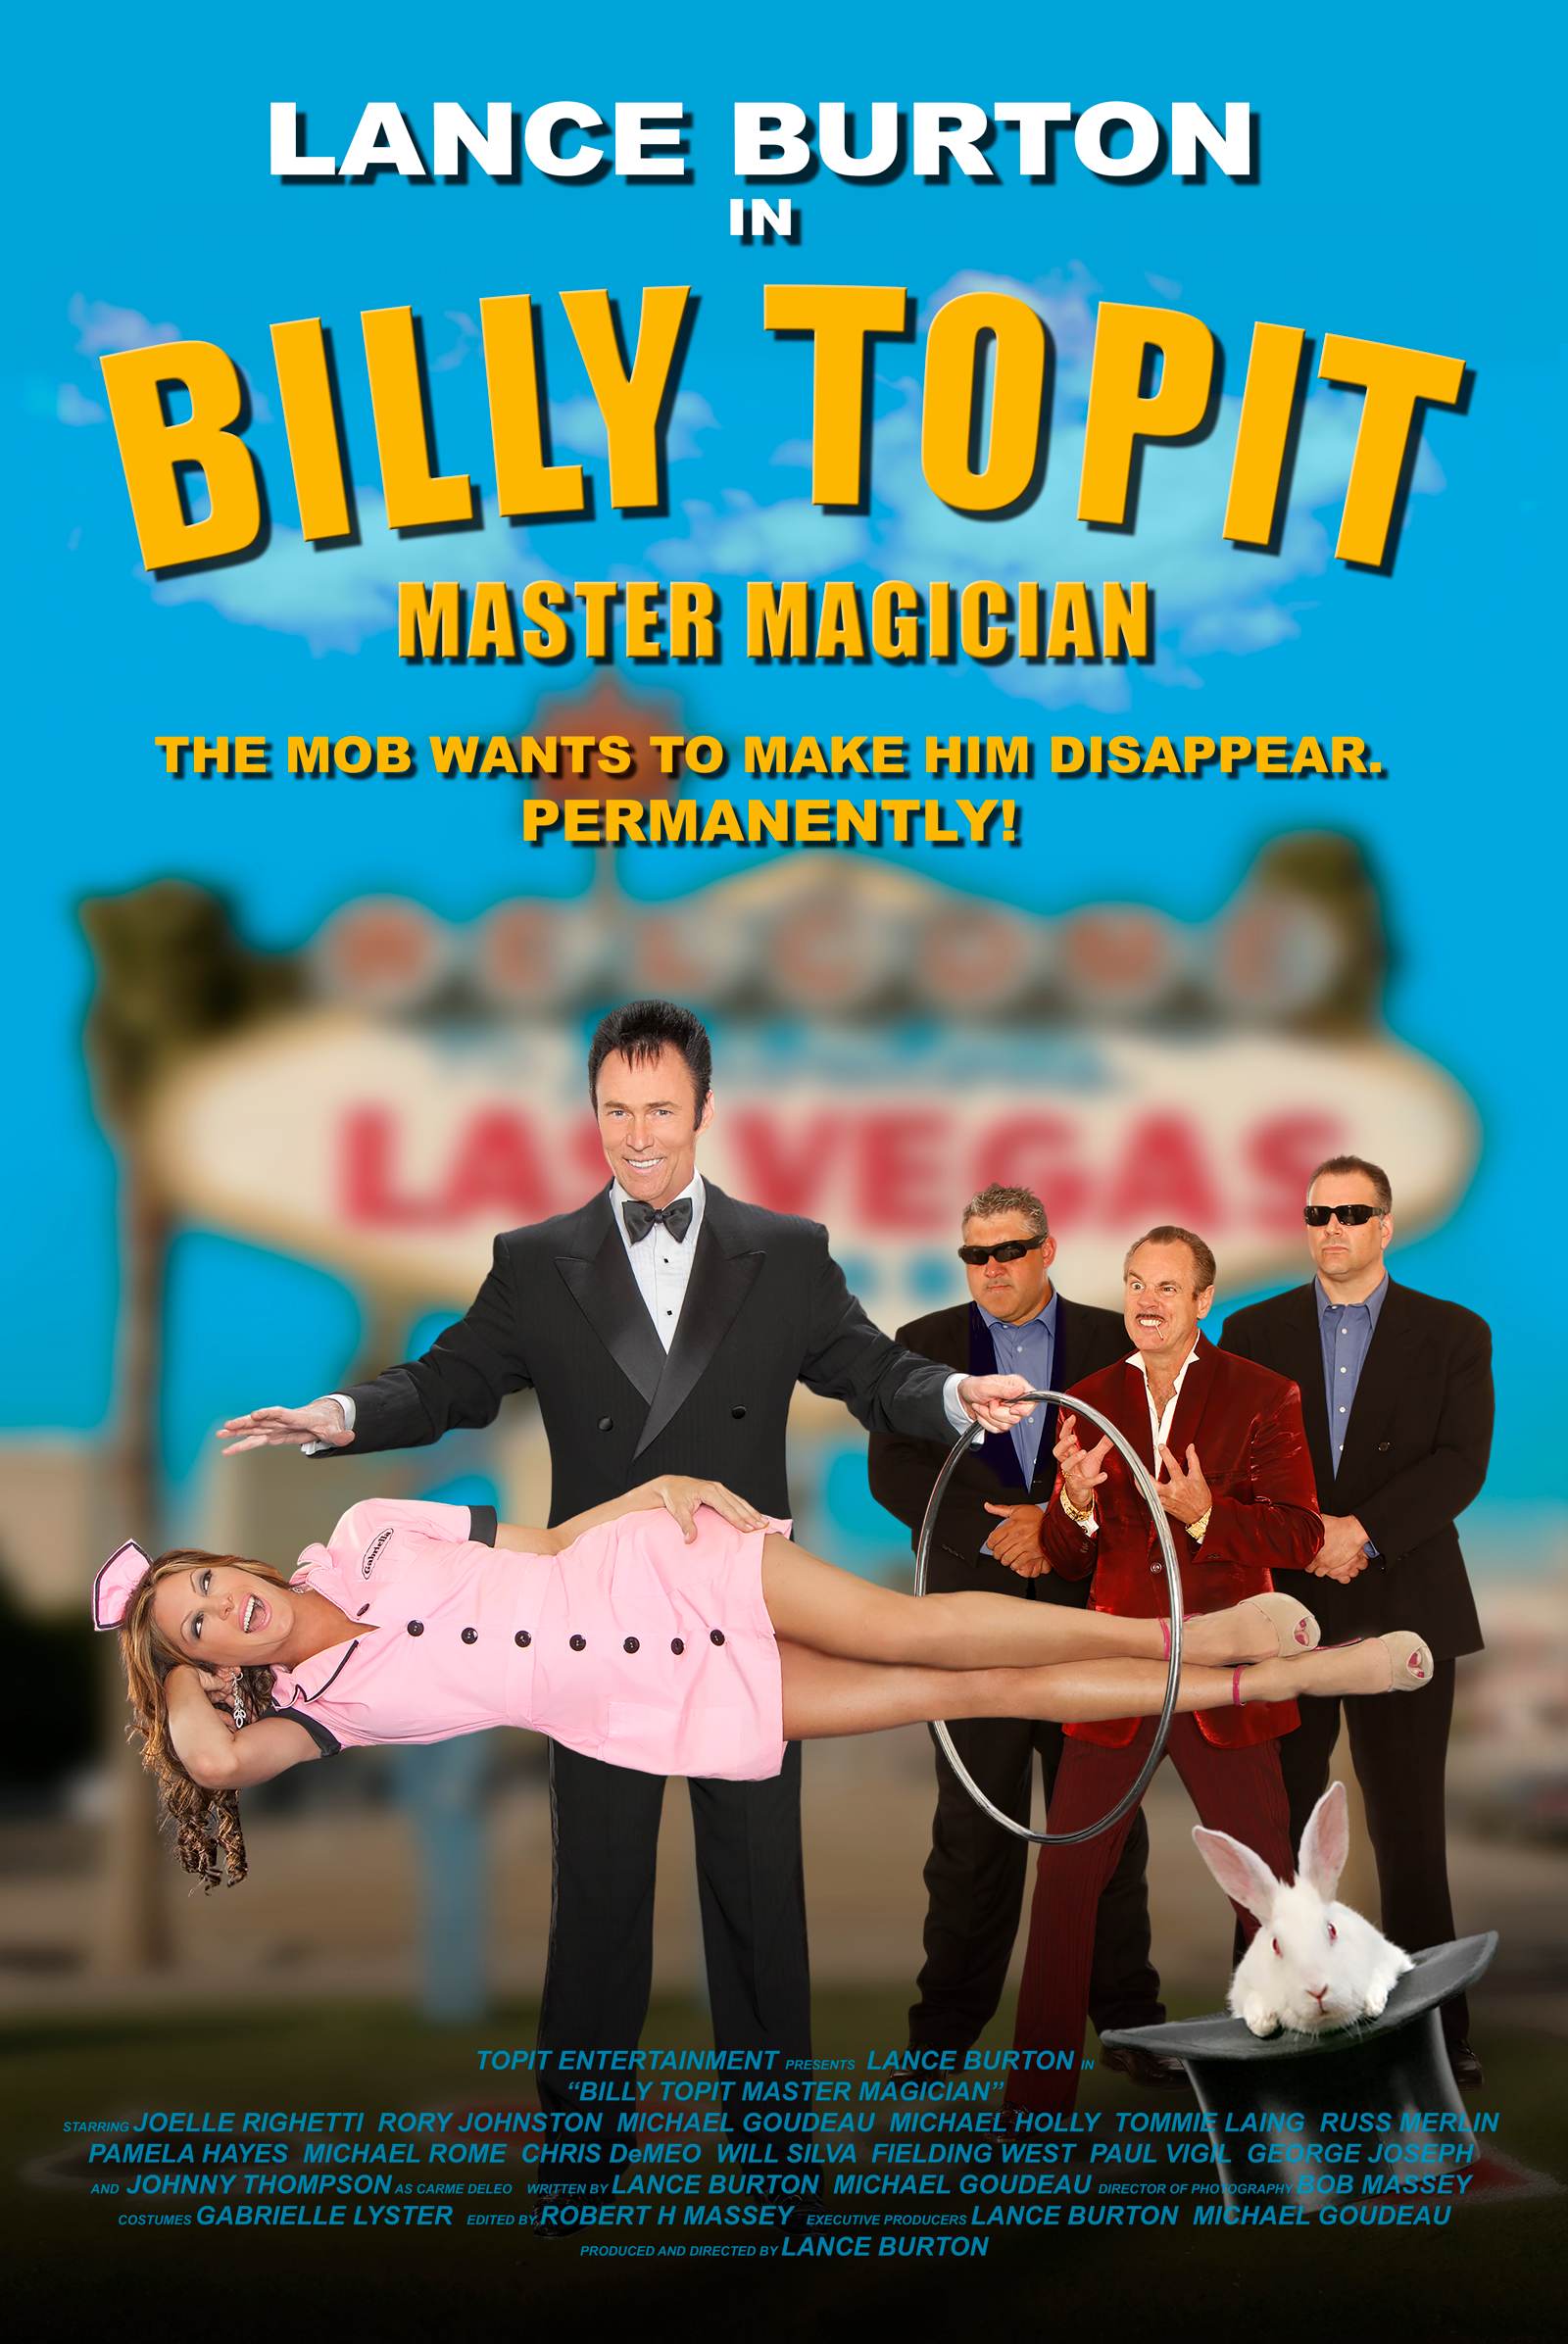 Lance Burton - Billy Topit Master Magician